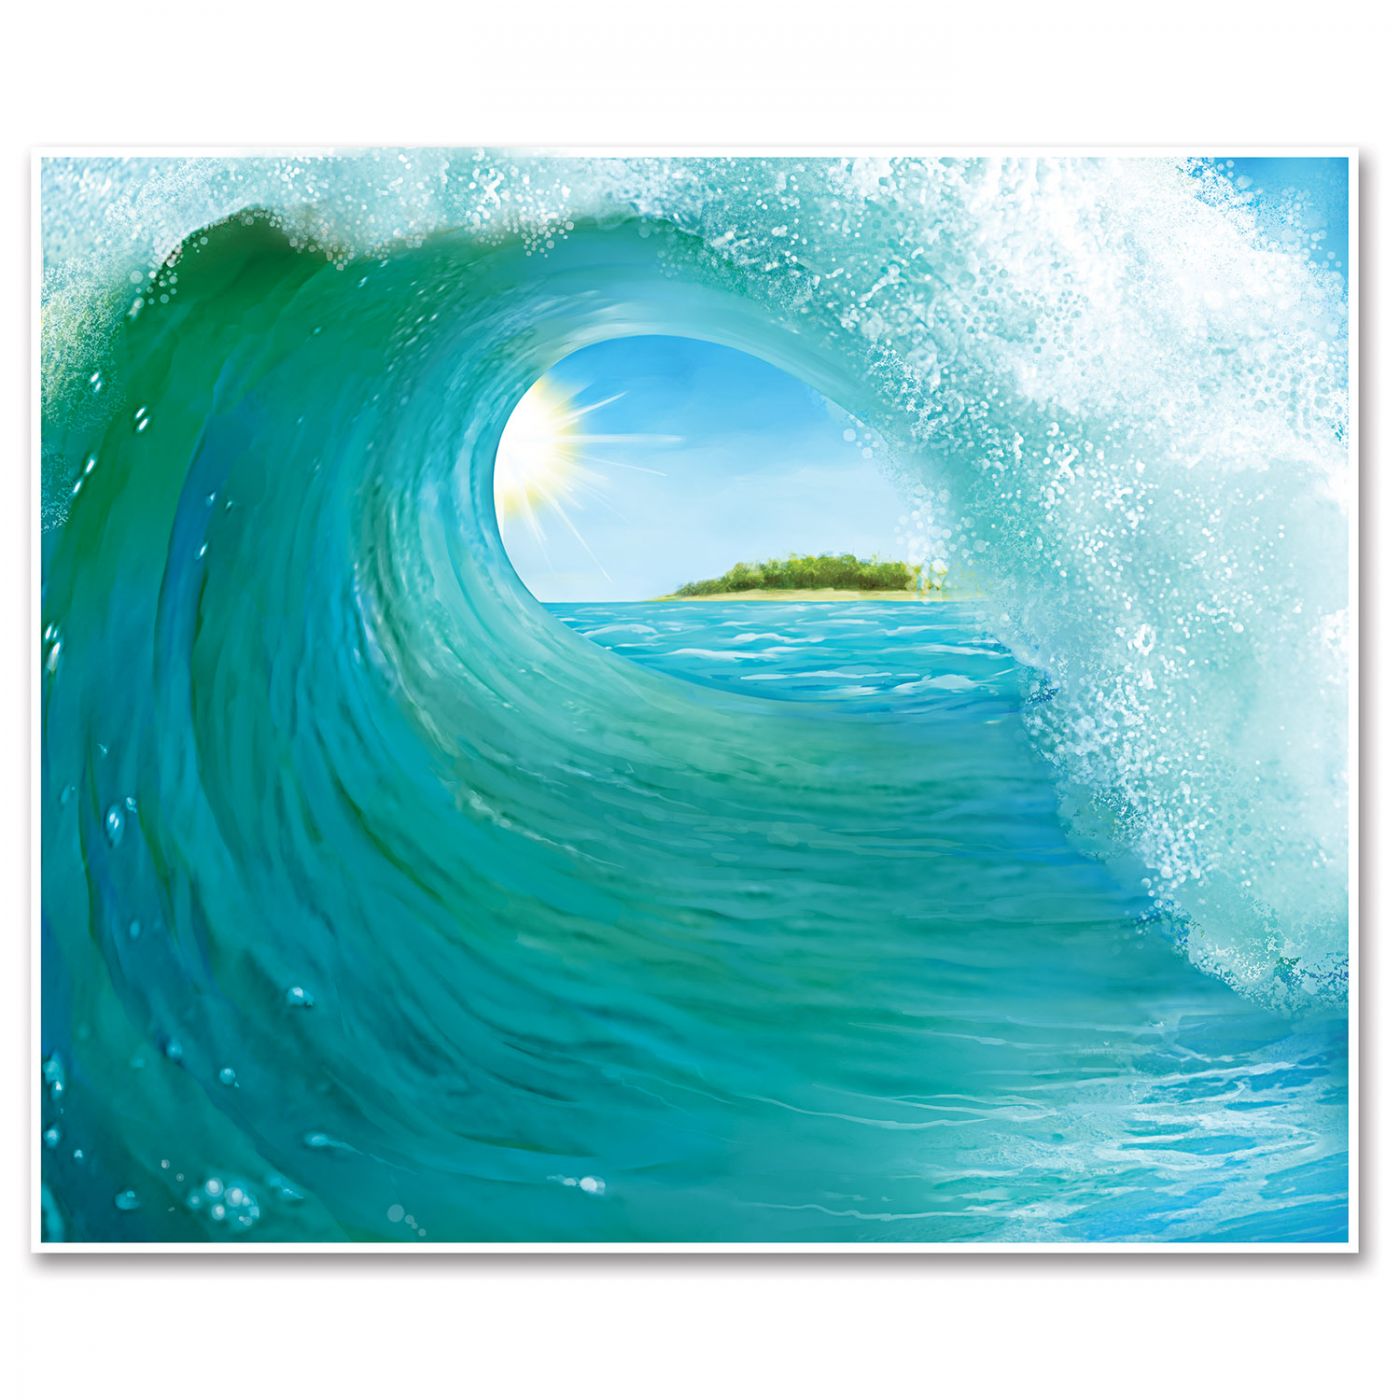 Surf Wave Insta-Mural (6) image